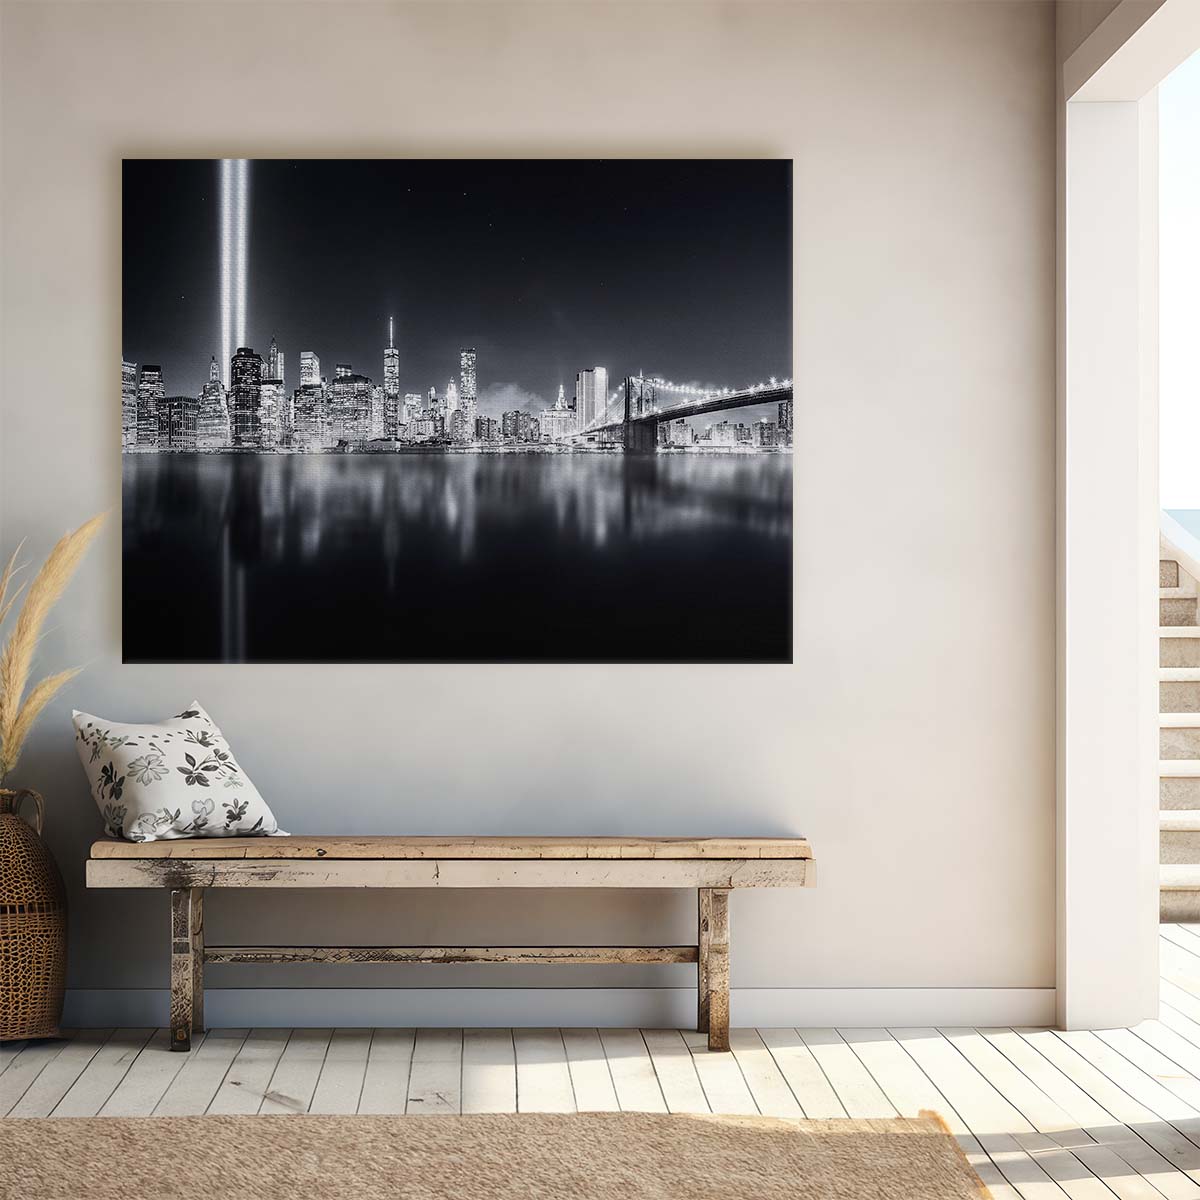 NYC Skyline & Brooklyn Bridge Night Panorama Wall Art by Luxuriance Designs. Made in USA.